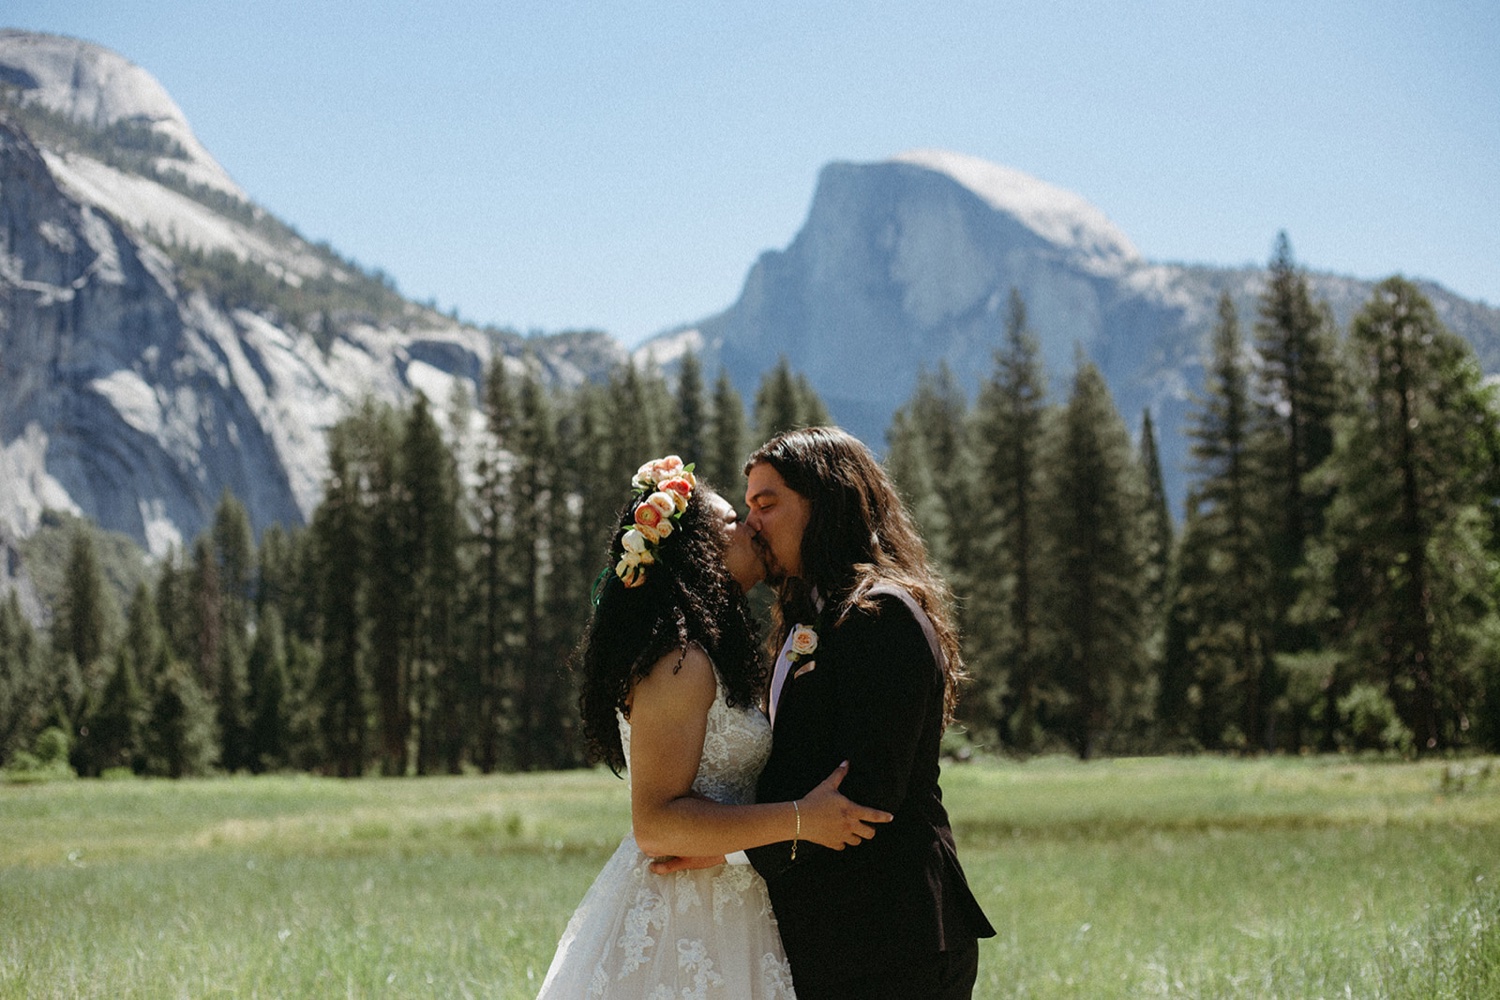 Bride and groom enjoying their wedding day in Yosemite.